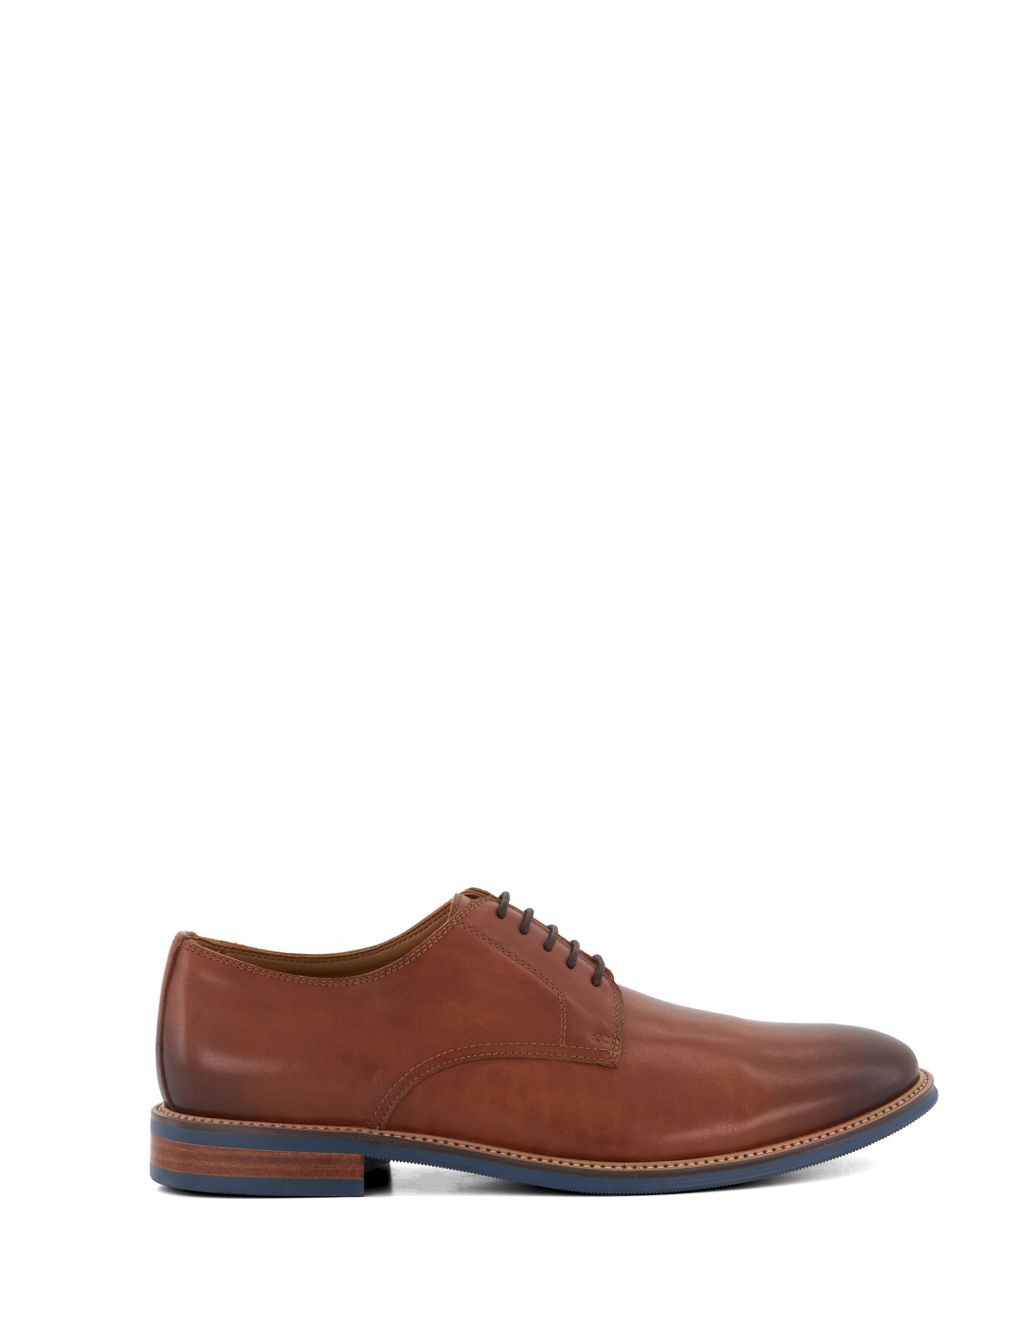 Men’s Brown Casual Shoes | M&S